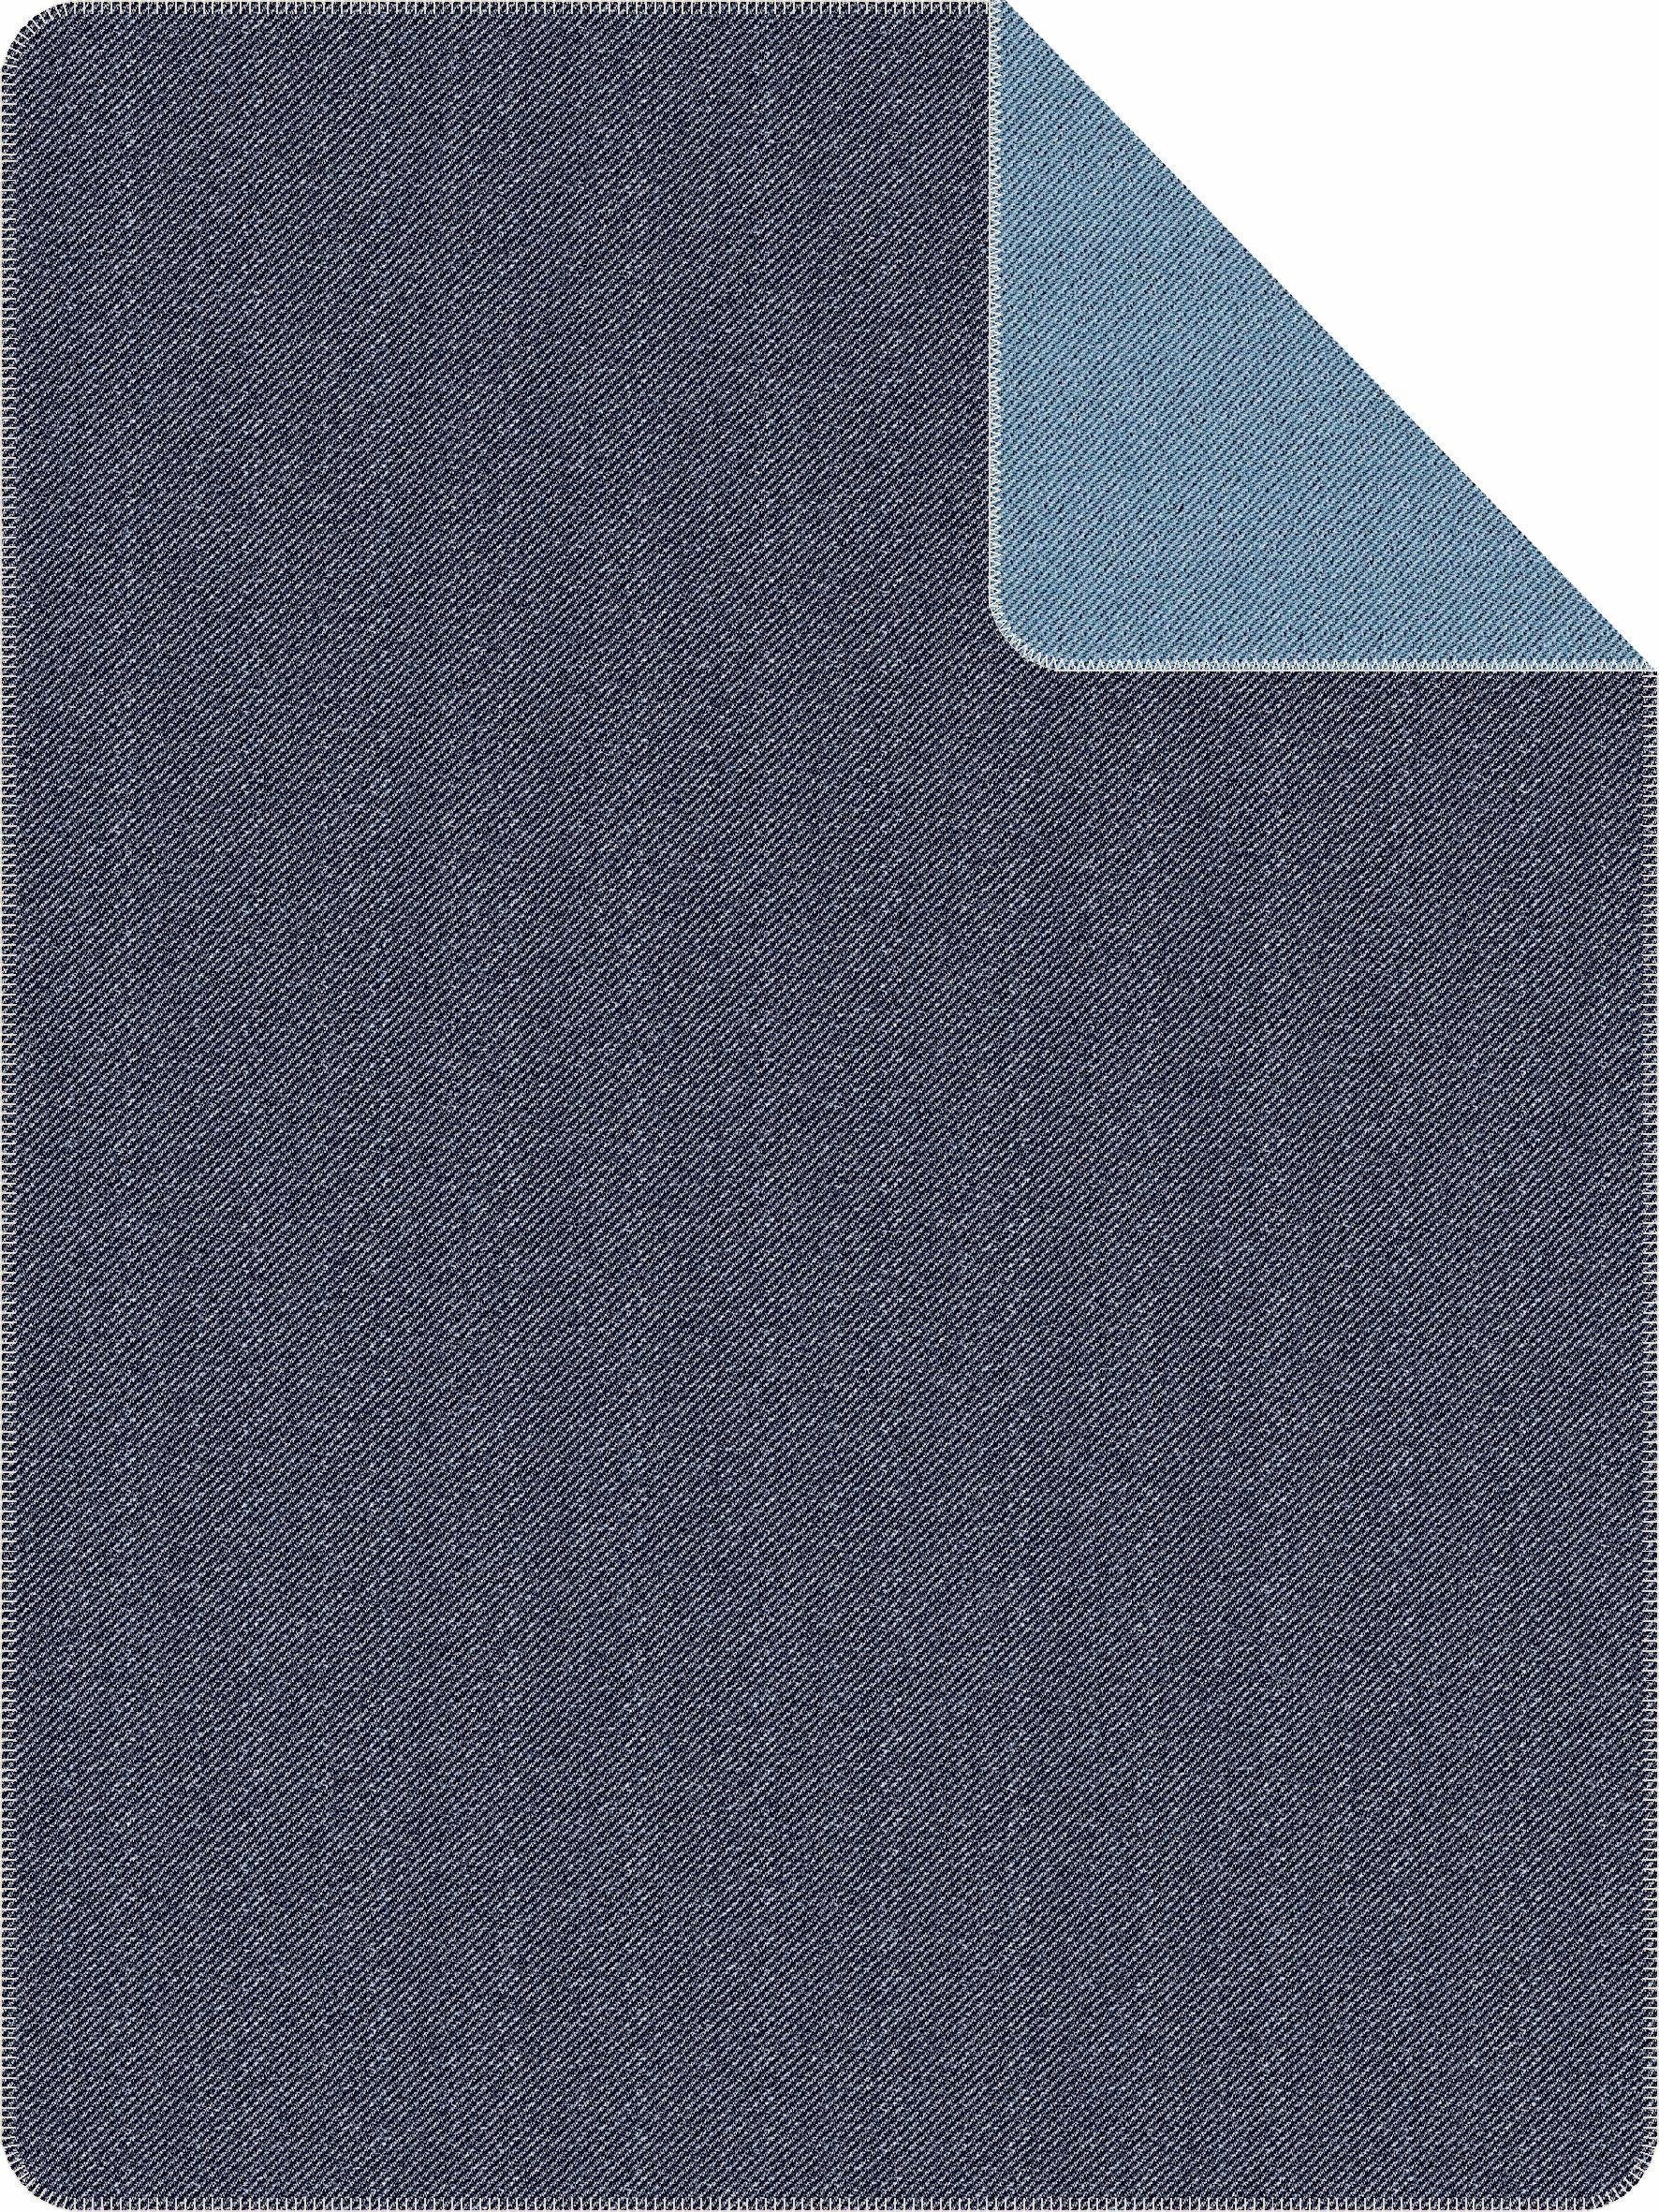 Wohndecke Haag, s.Oliver, in Doubleface blau Kuscheldecke Optik